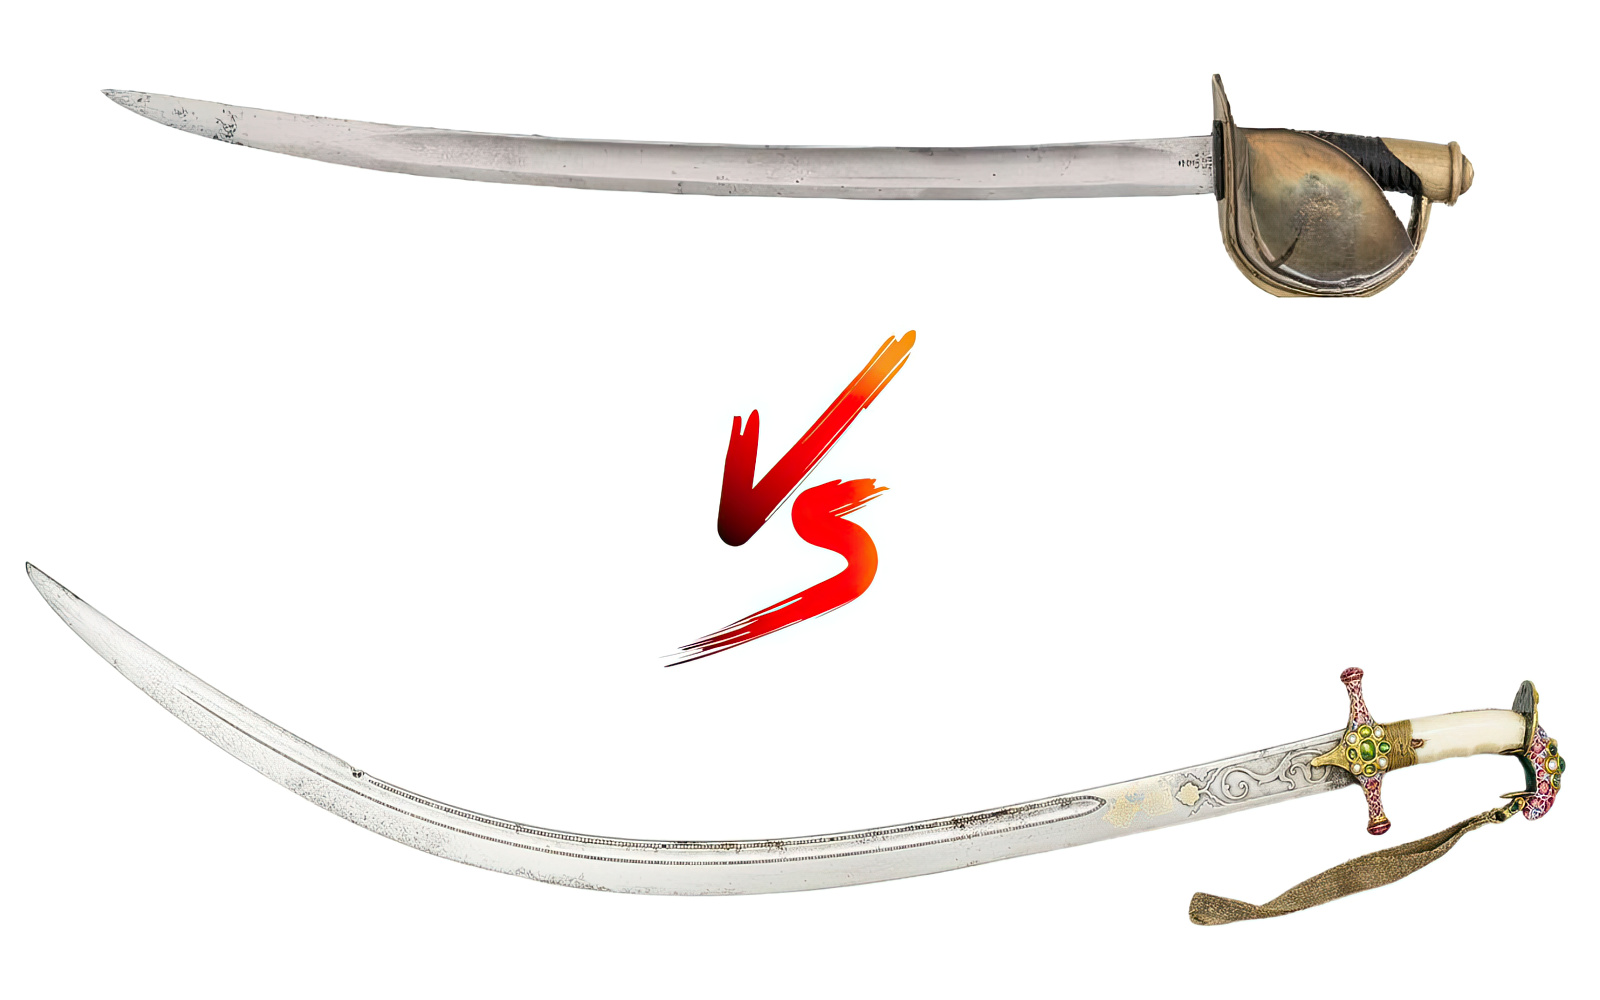 Scimitar vs Cutlass: Design, History and Combat Differences